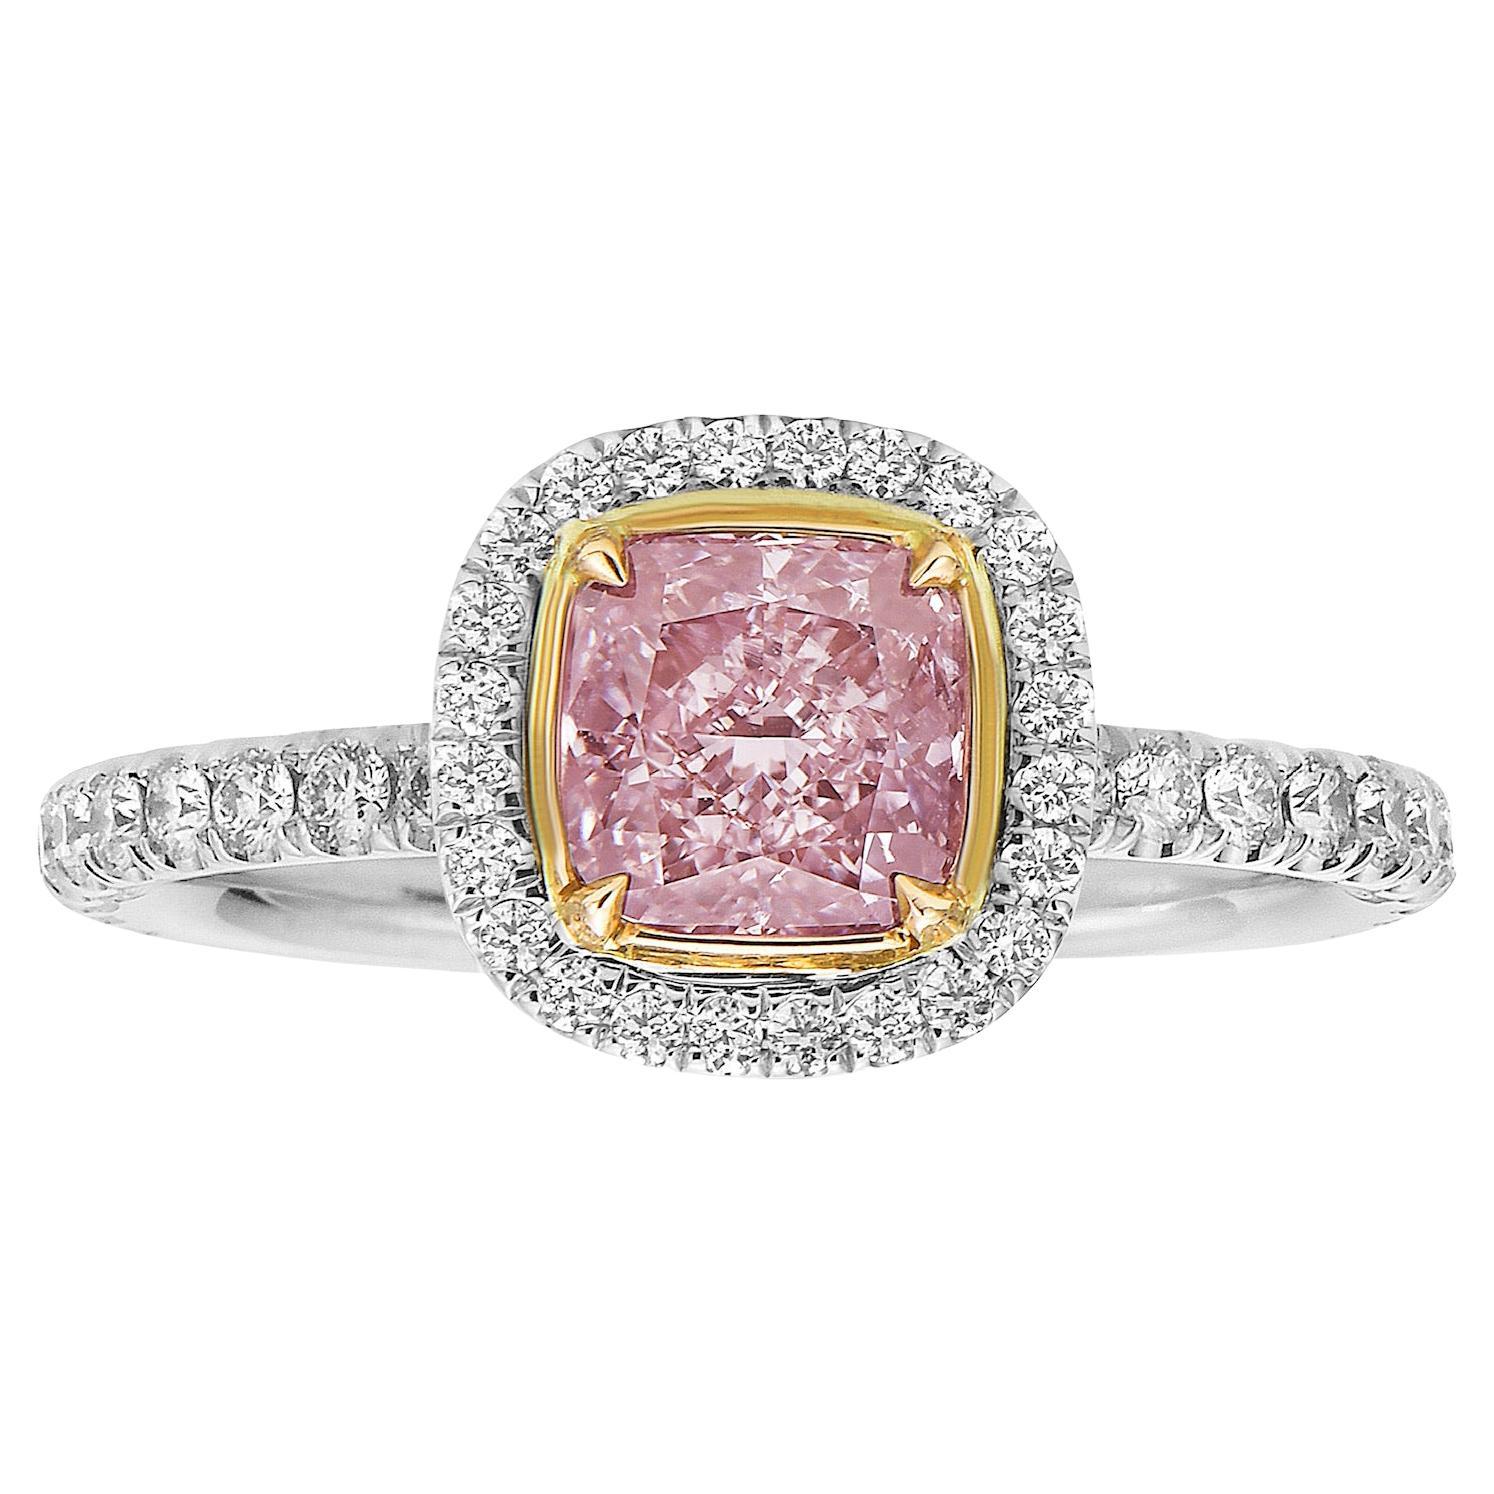 1 Carat GIA Very Light Pink Cushion Cut Diamond Ring For Sale